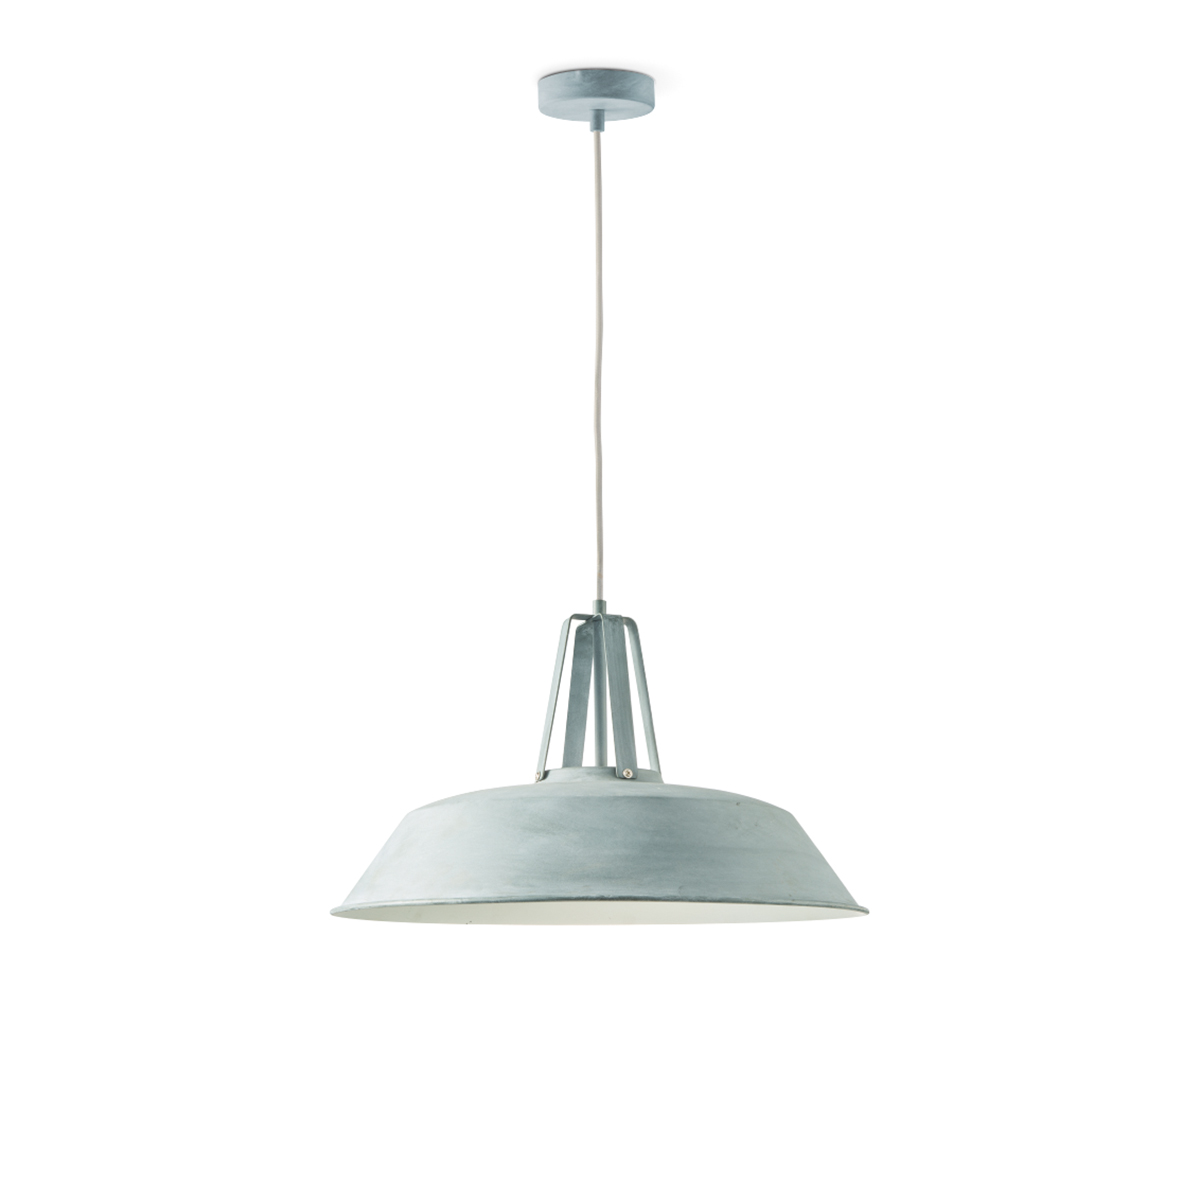 Tangla lighting - TLP4059-01GY - LED pendant lamp 1 Light - metal in concrete grey - UFO standard - E27